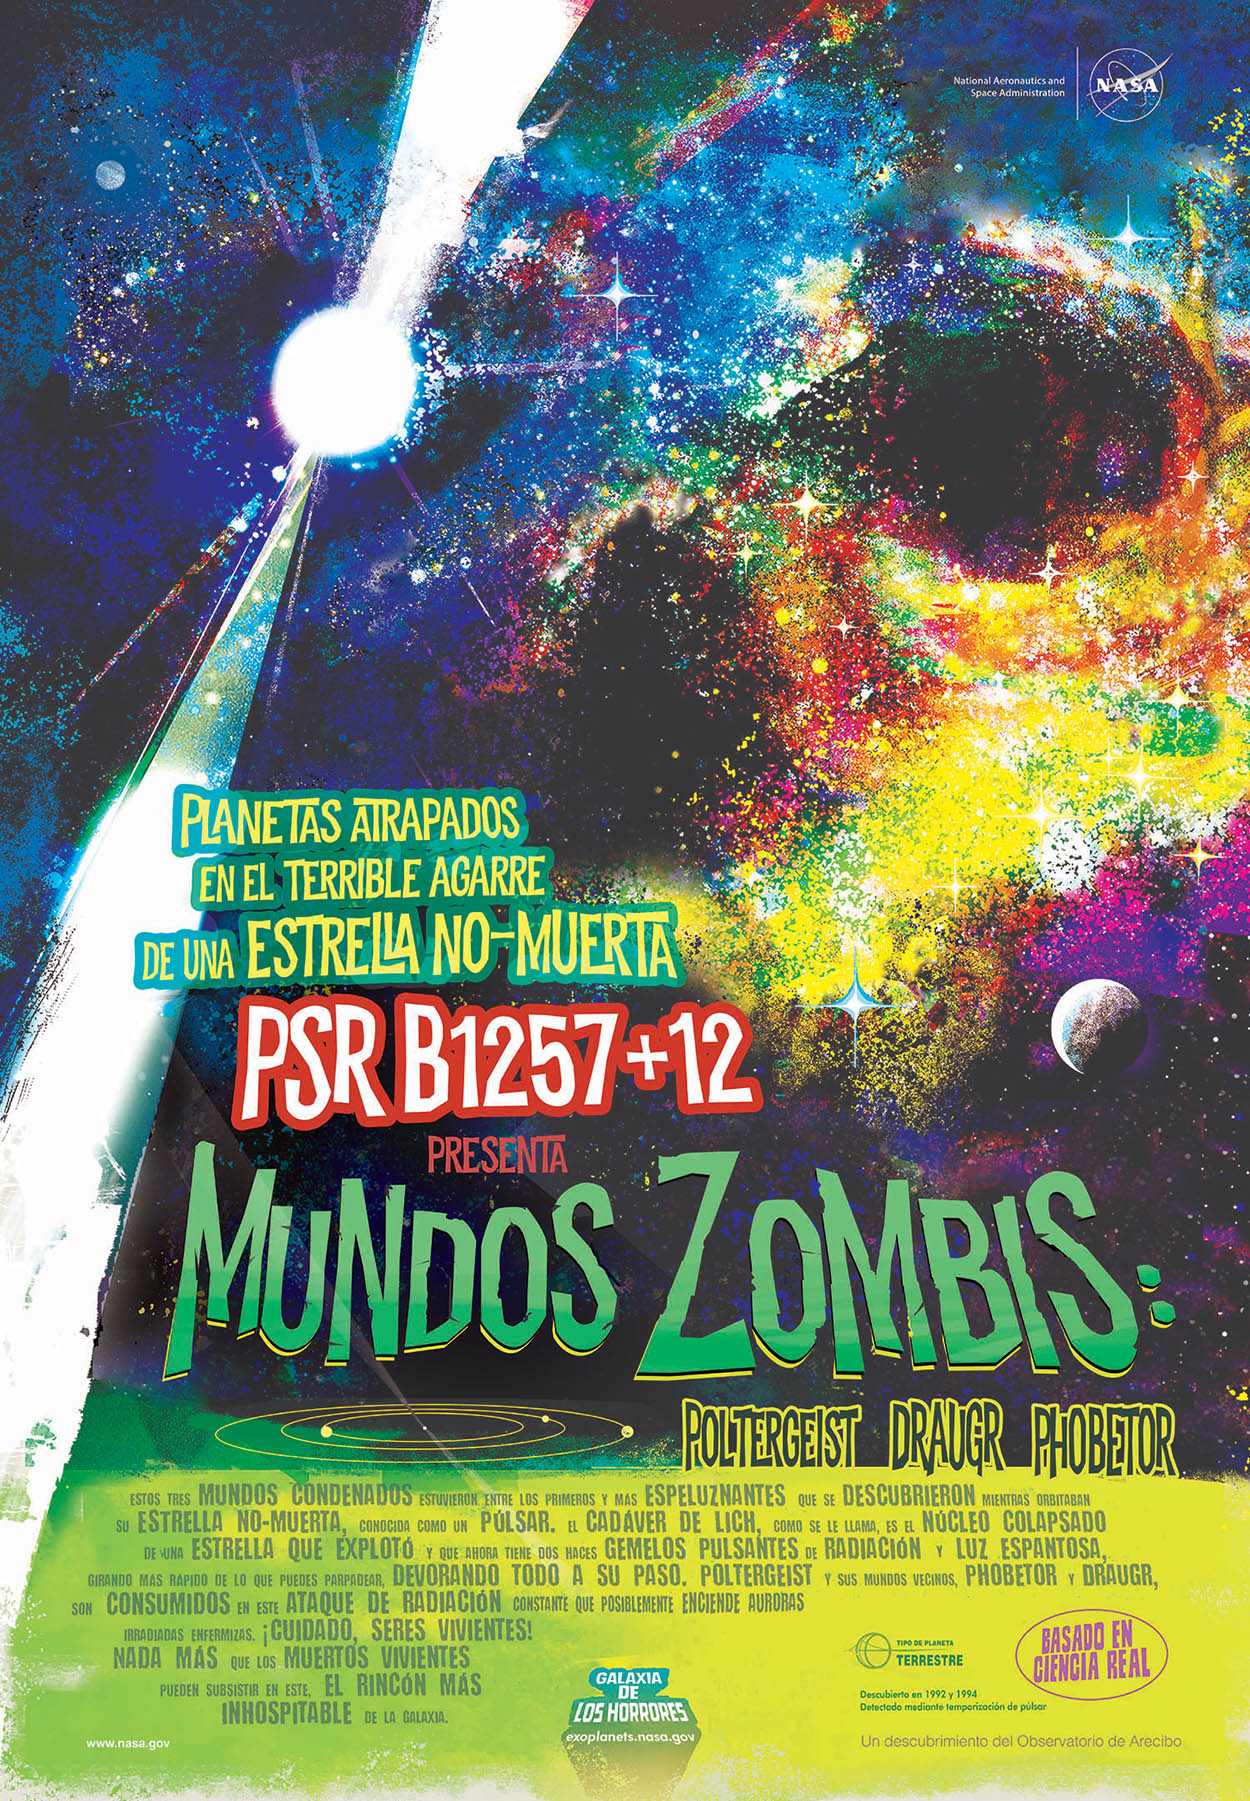 Mundos Zombis – "Galaxy of Horrors" póster (En Español)